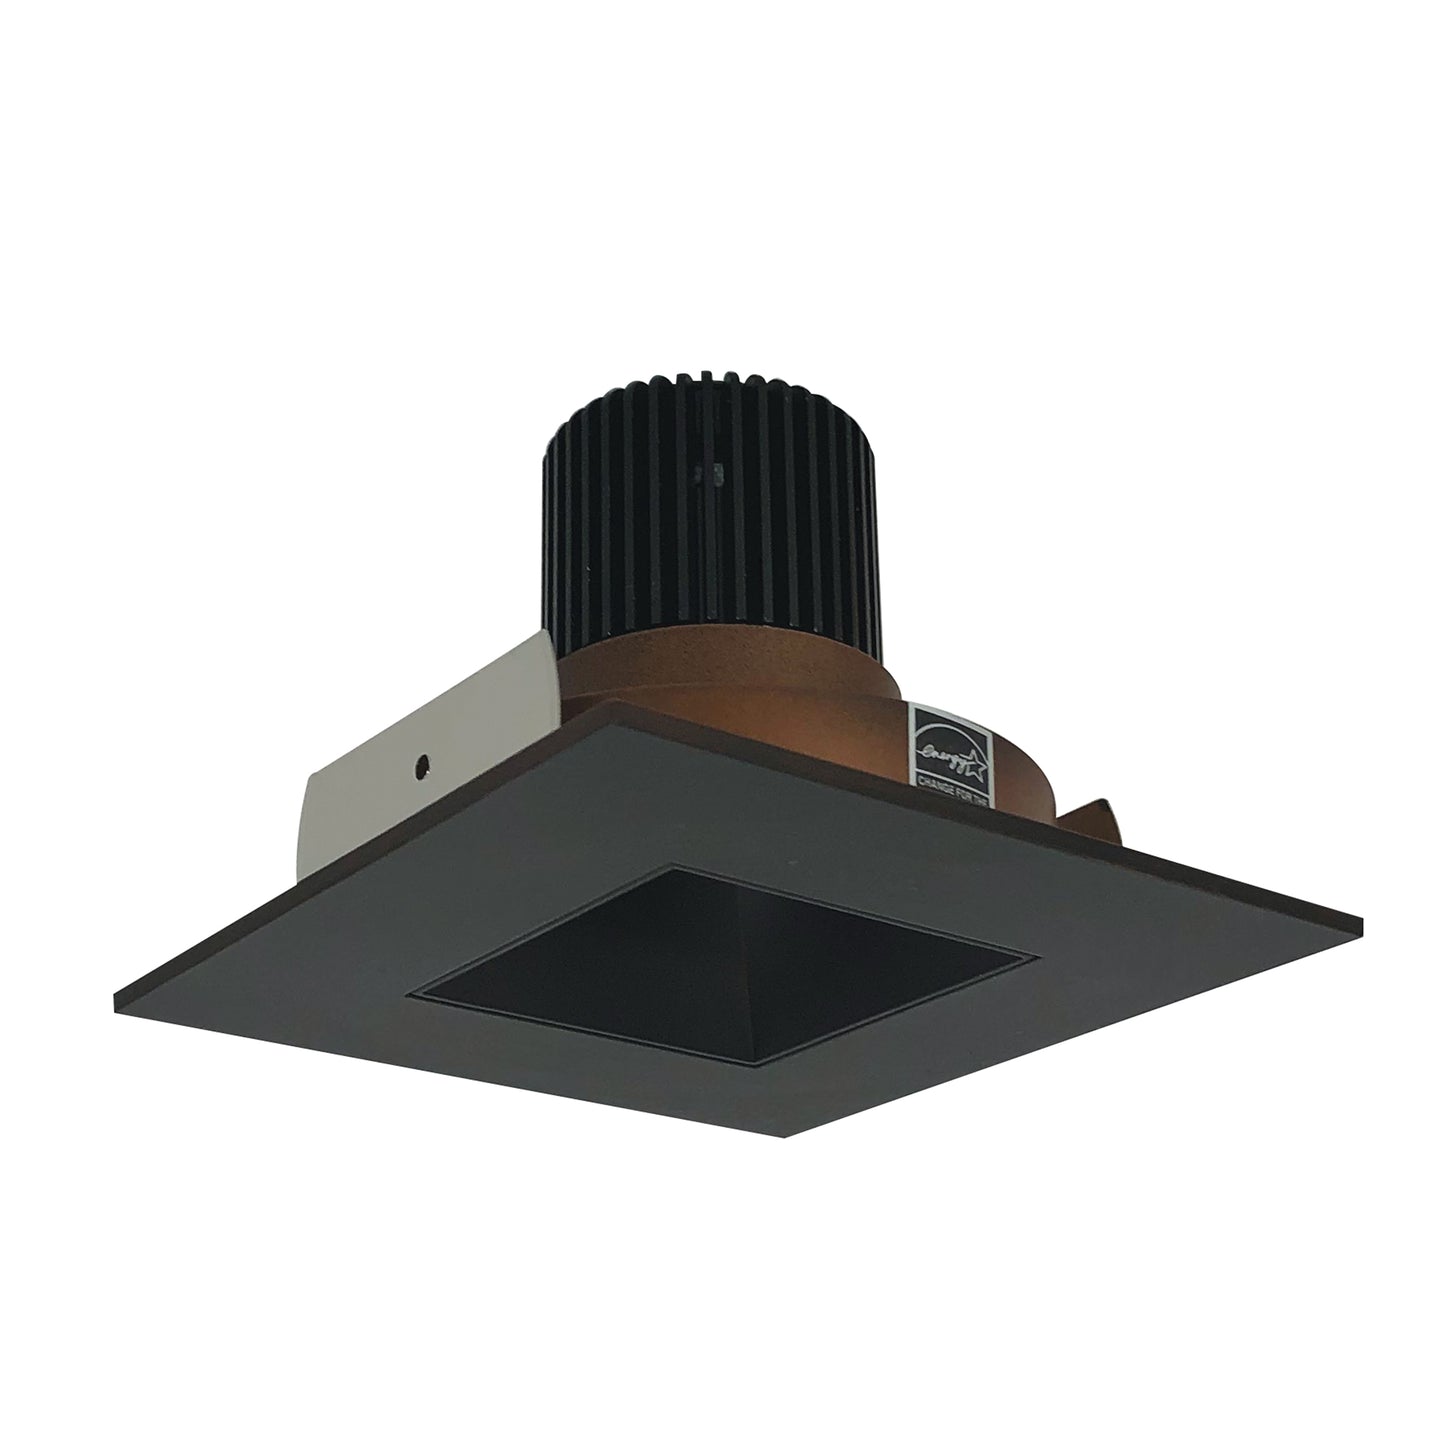 Nora Lighting 4" Iolite LED Square Reflector with Square Aperture, 10-Degree Optic, 850lm / 12W, 3000K, Bronze Reflector / Bronze Flange NIO-4SNDSQ30QBZ